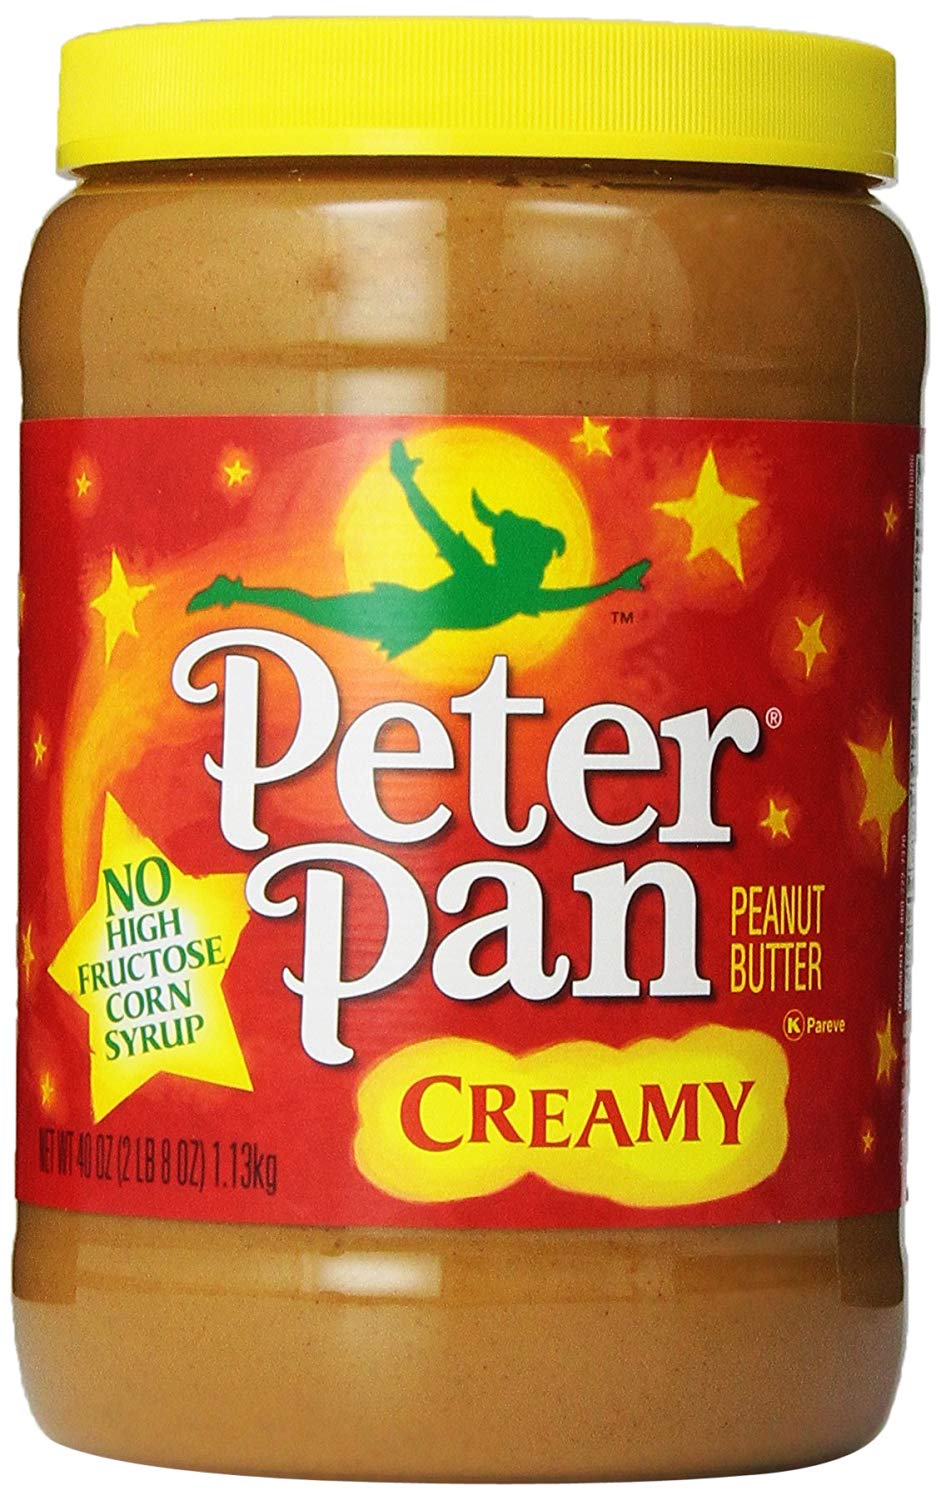 Peter Pan Peanut Butter Logo - Amazon.com : Peter Pan Creamy Peanut Butter, 40 Ounce Jars Pack